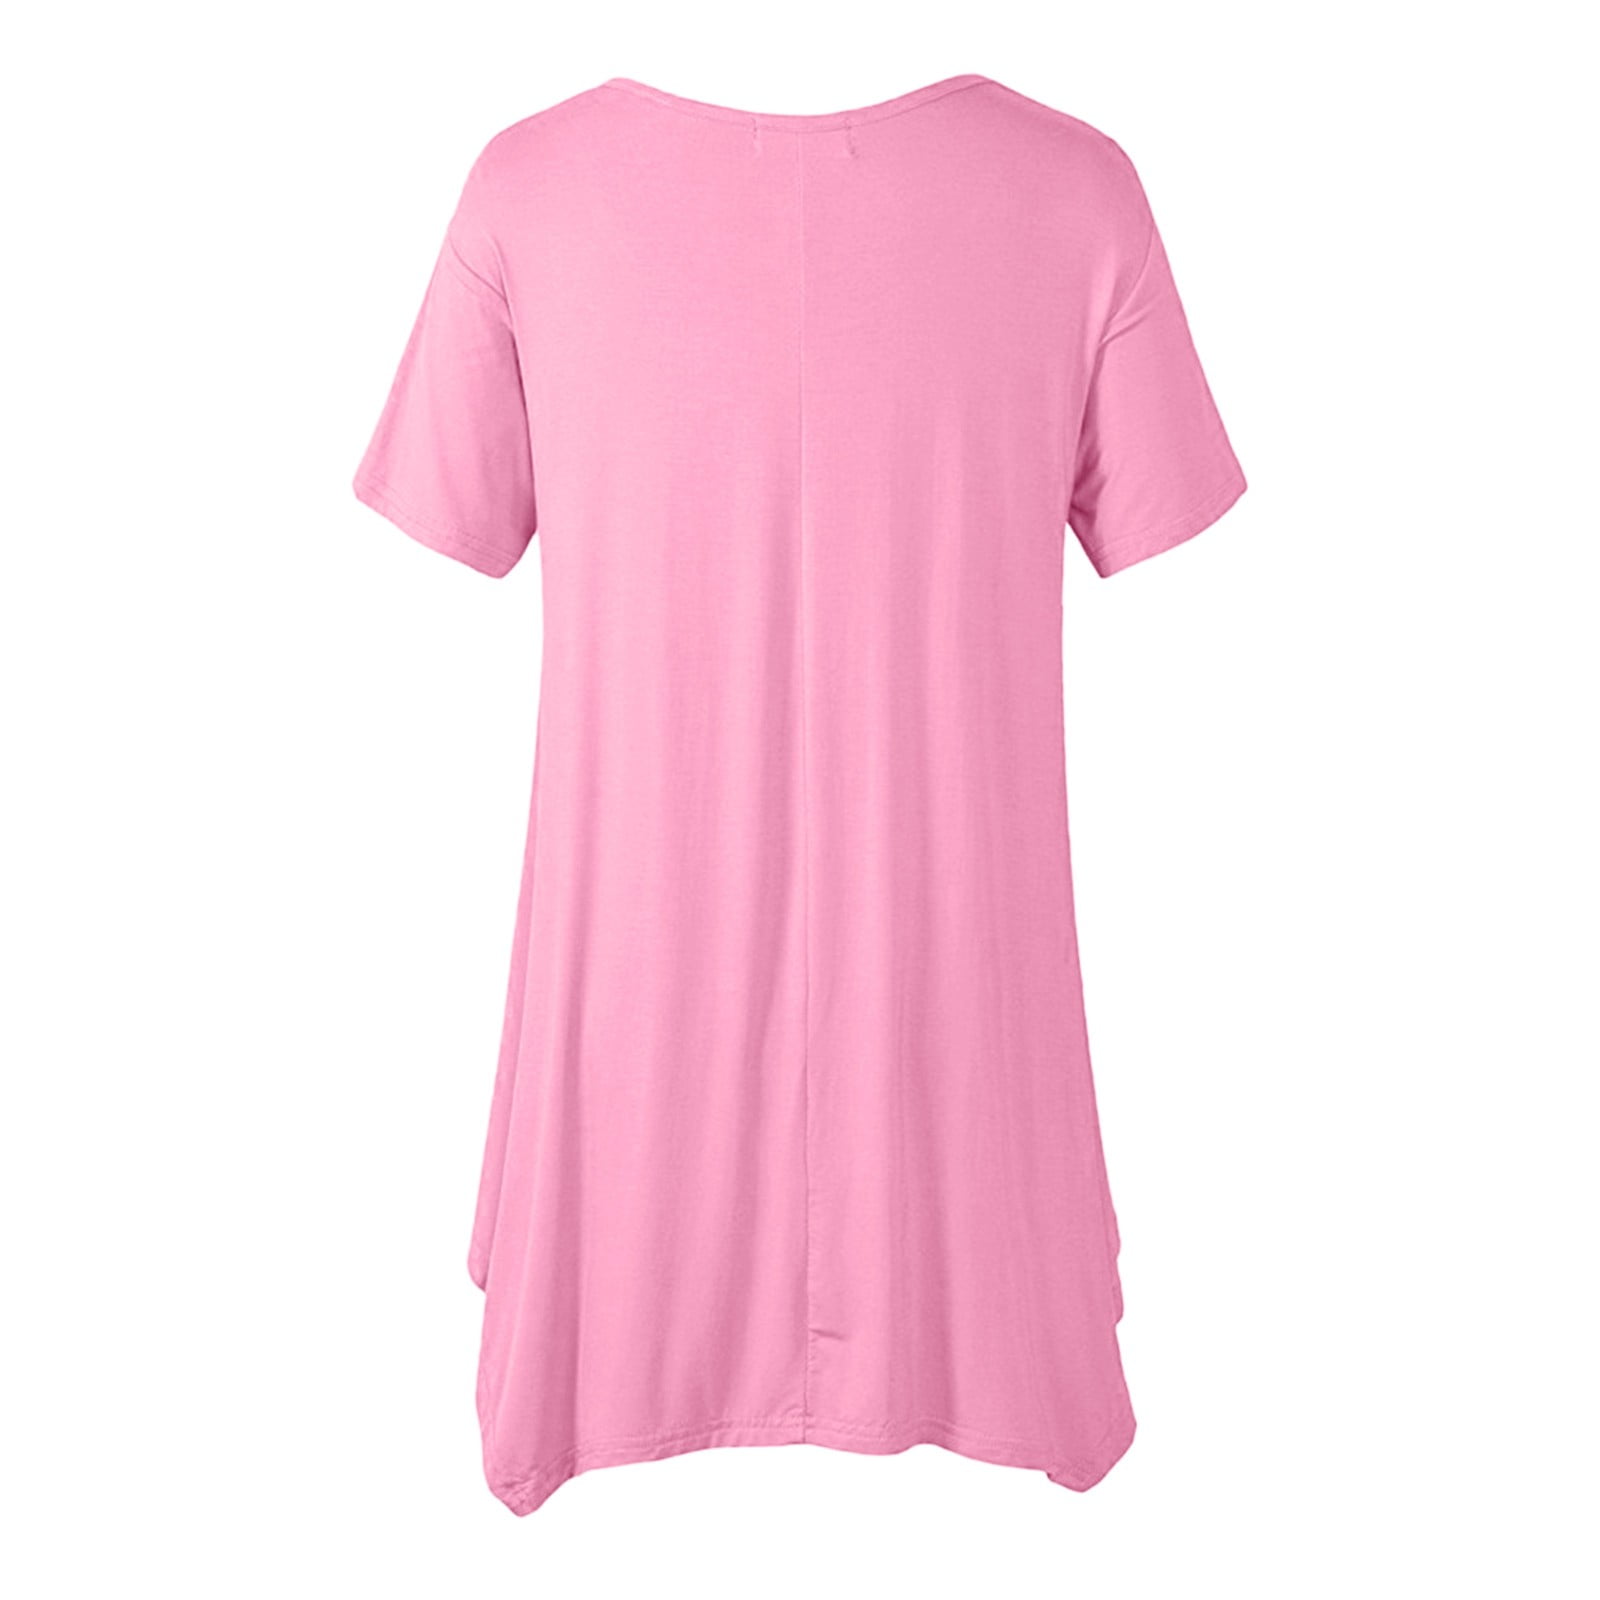 Aayomet Business Casual Tops For Women Women's Cute Juniors Tops Teen Girl  Tee Funny T Shirt,Pink M 